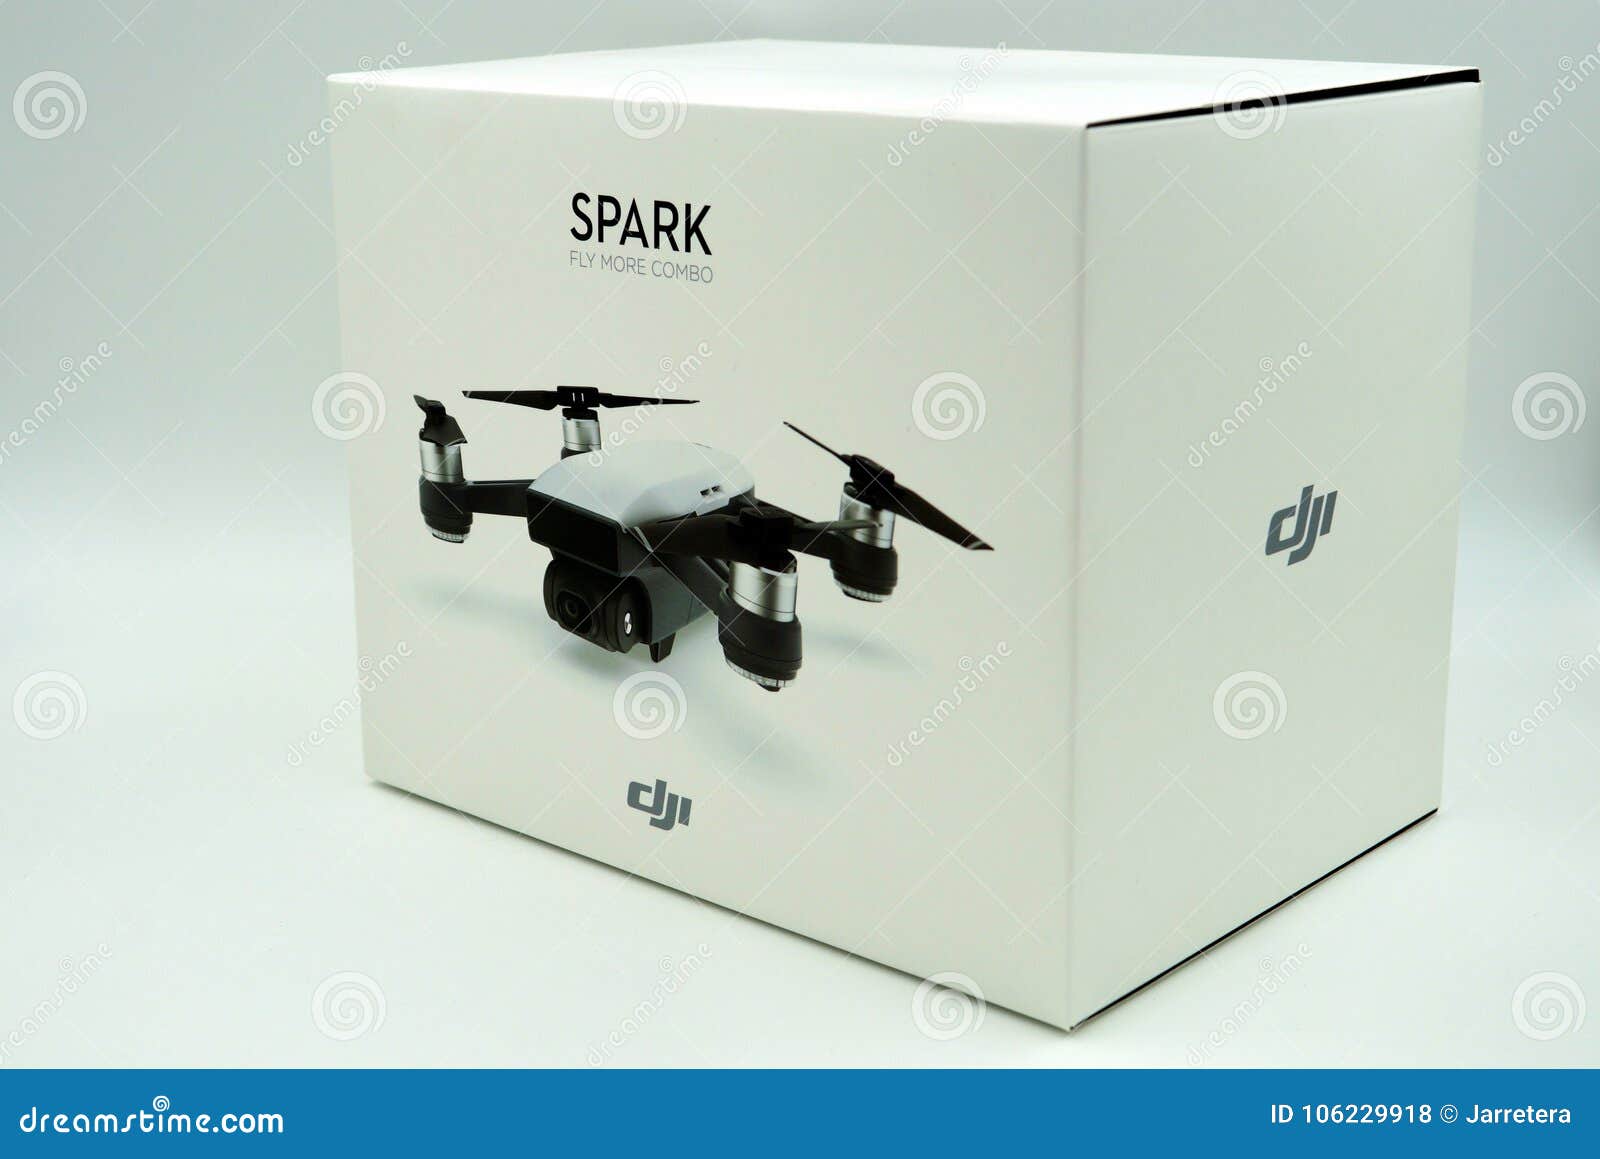 DJI Spark Quadcopter Drone Retail Box Editorial Stock Photo